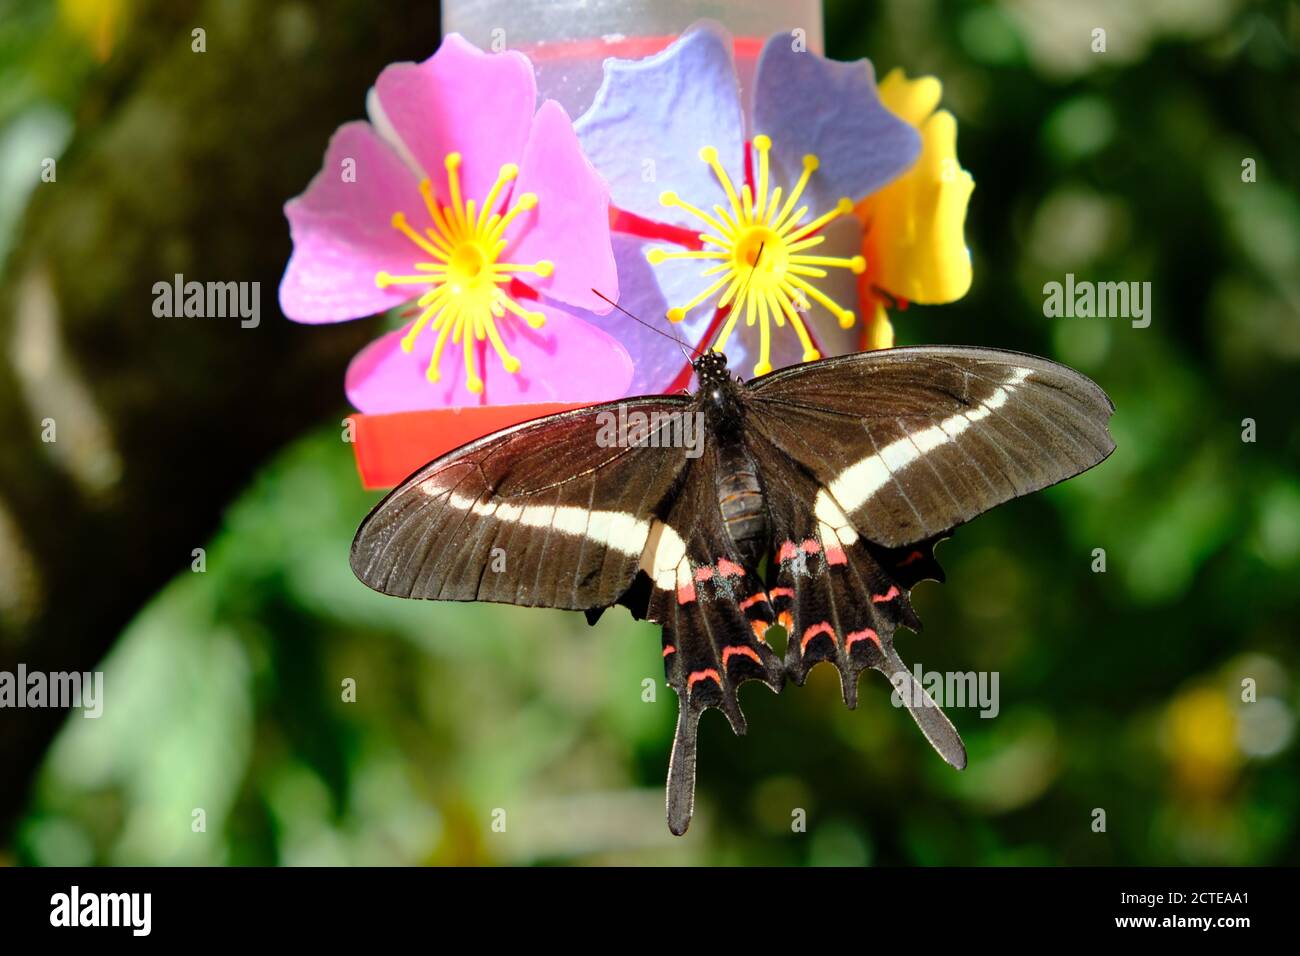 Brazil Foz do Iguacu - Zoo - Parque das Aves Feed butterfly with nectar Stock Photo